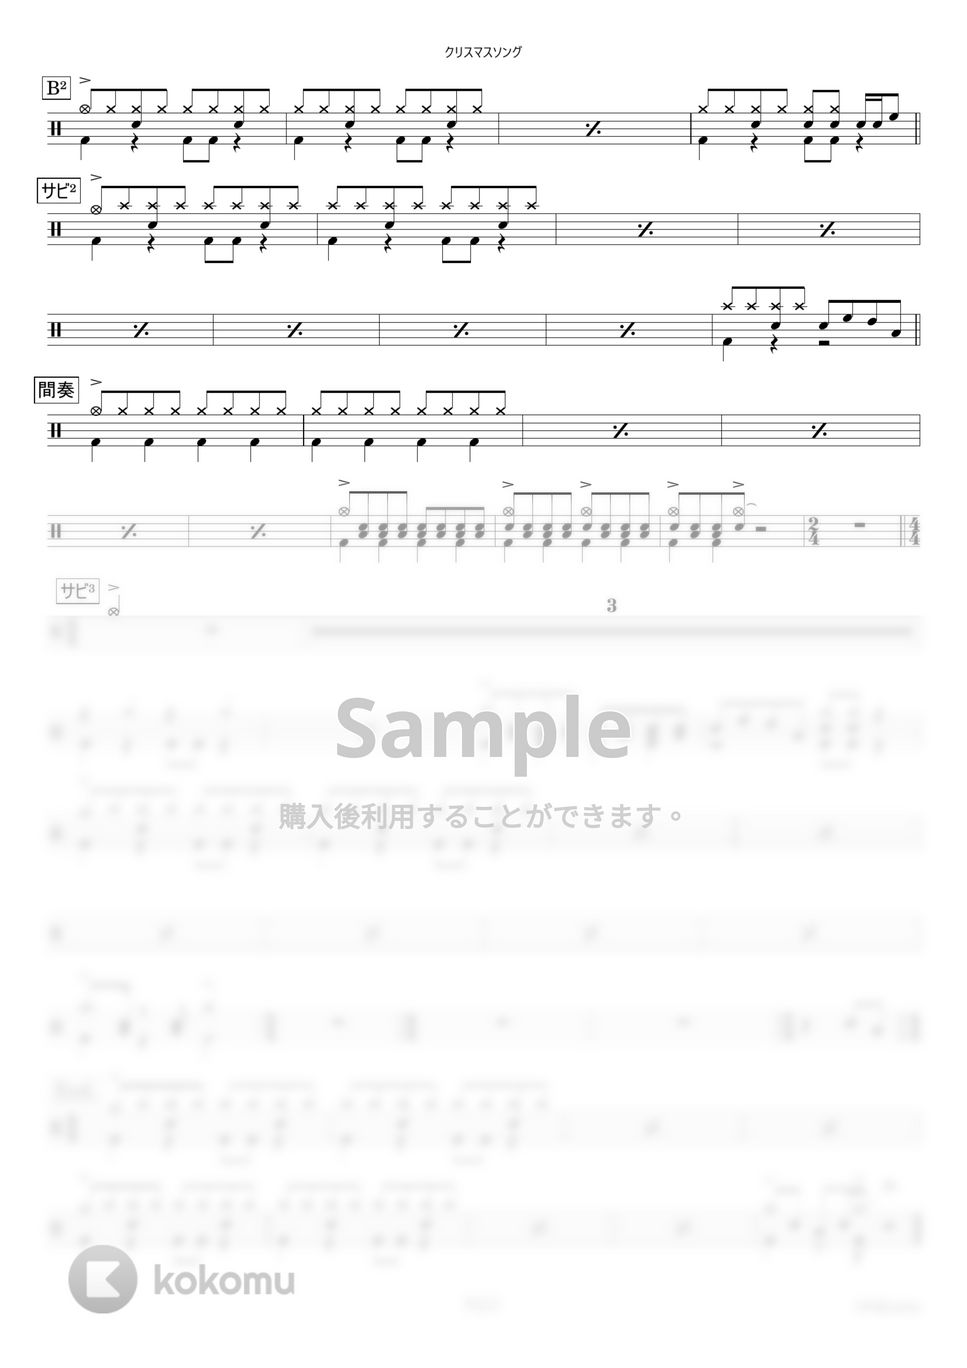 back number - クリスマスソング【ドラム楽譜・初心者向け】 by HYdrums